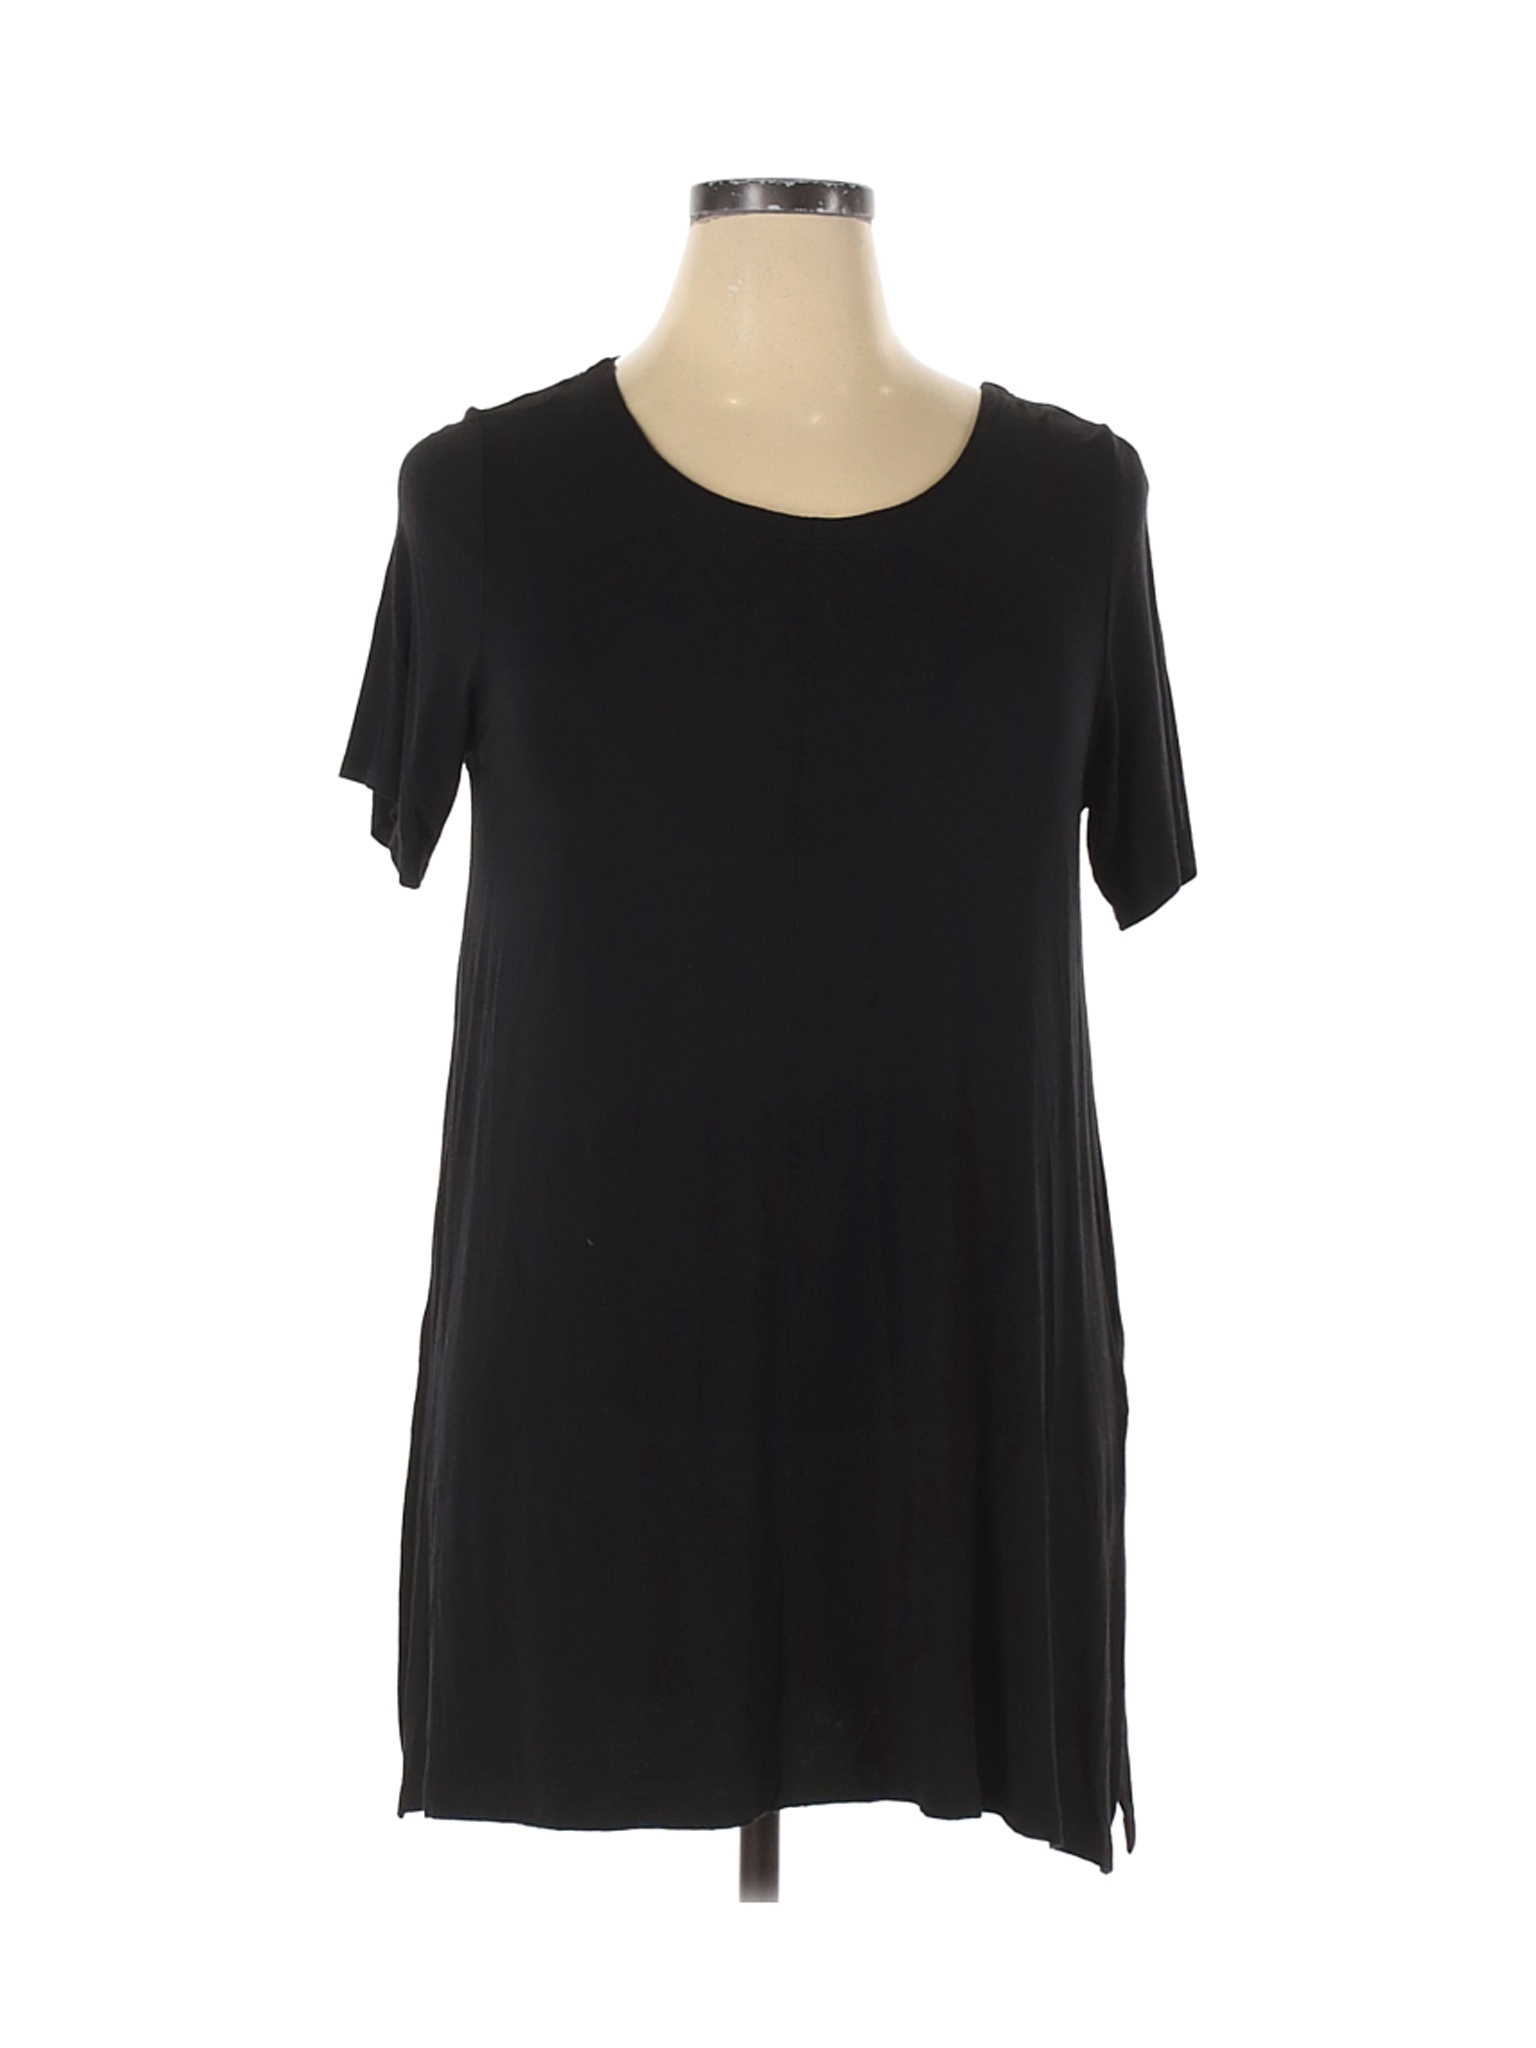 Cynthia Rowley TJX Women Black Short Sleeve Top 1X Plus | eBay